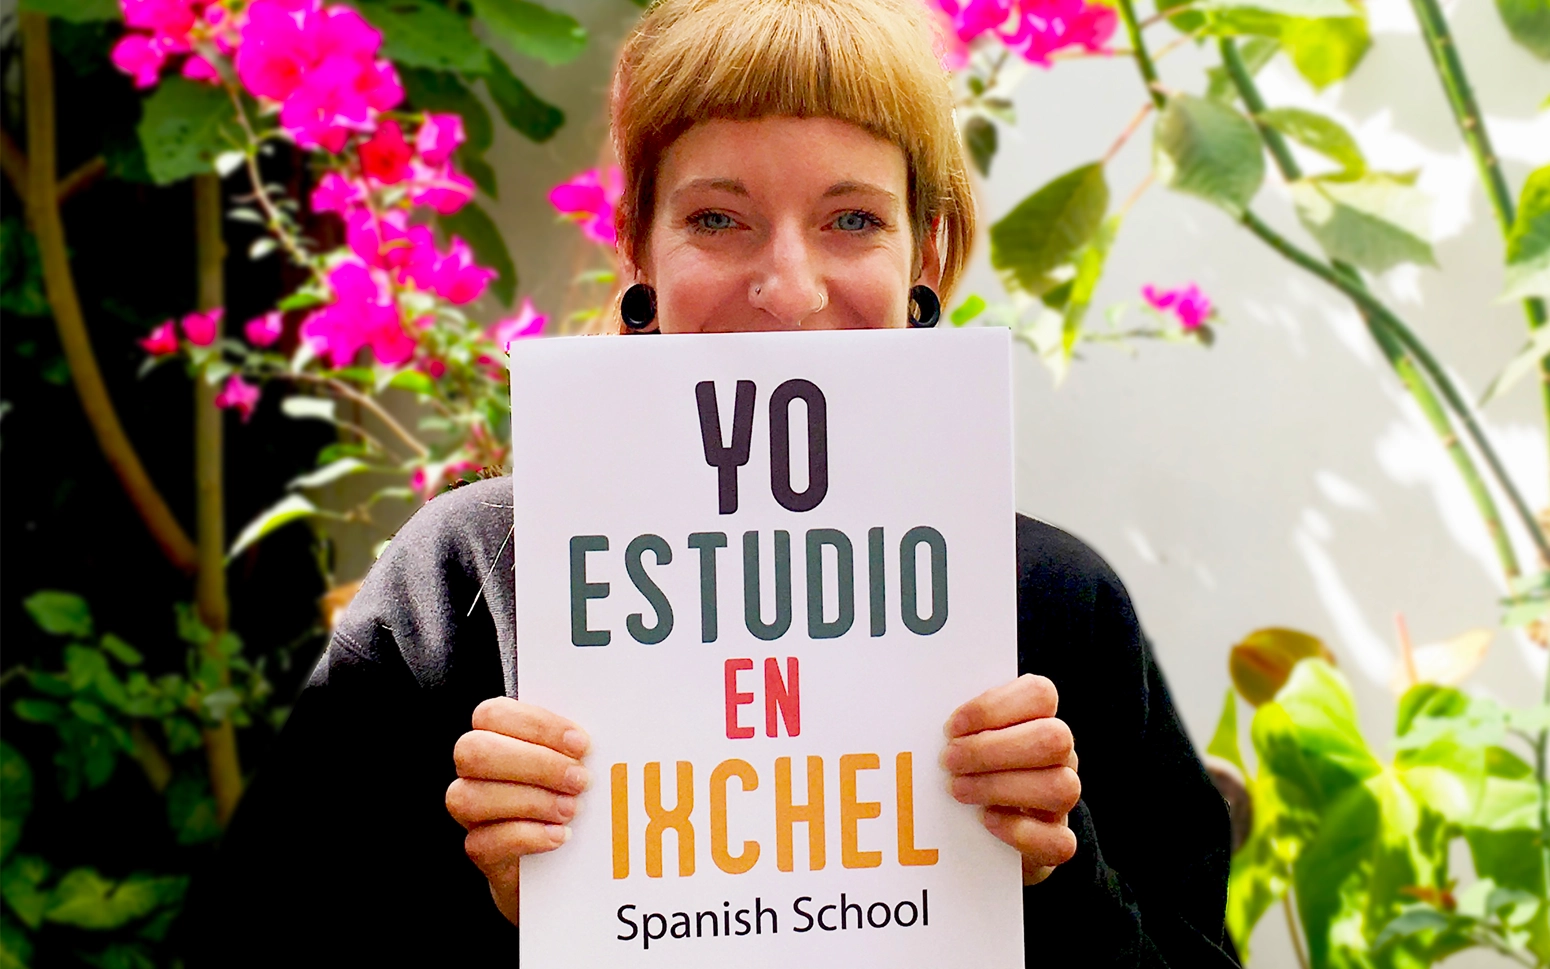 About Ixchel Spanish School